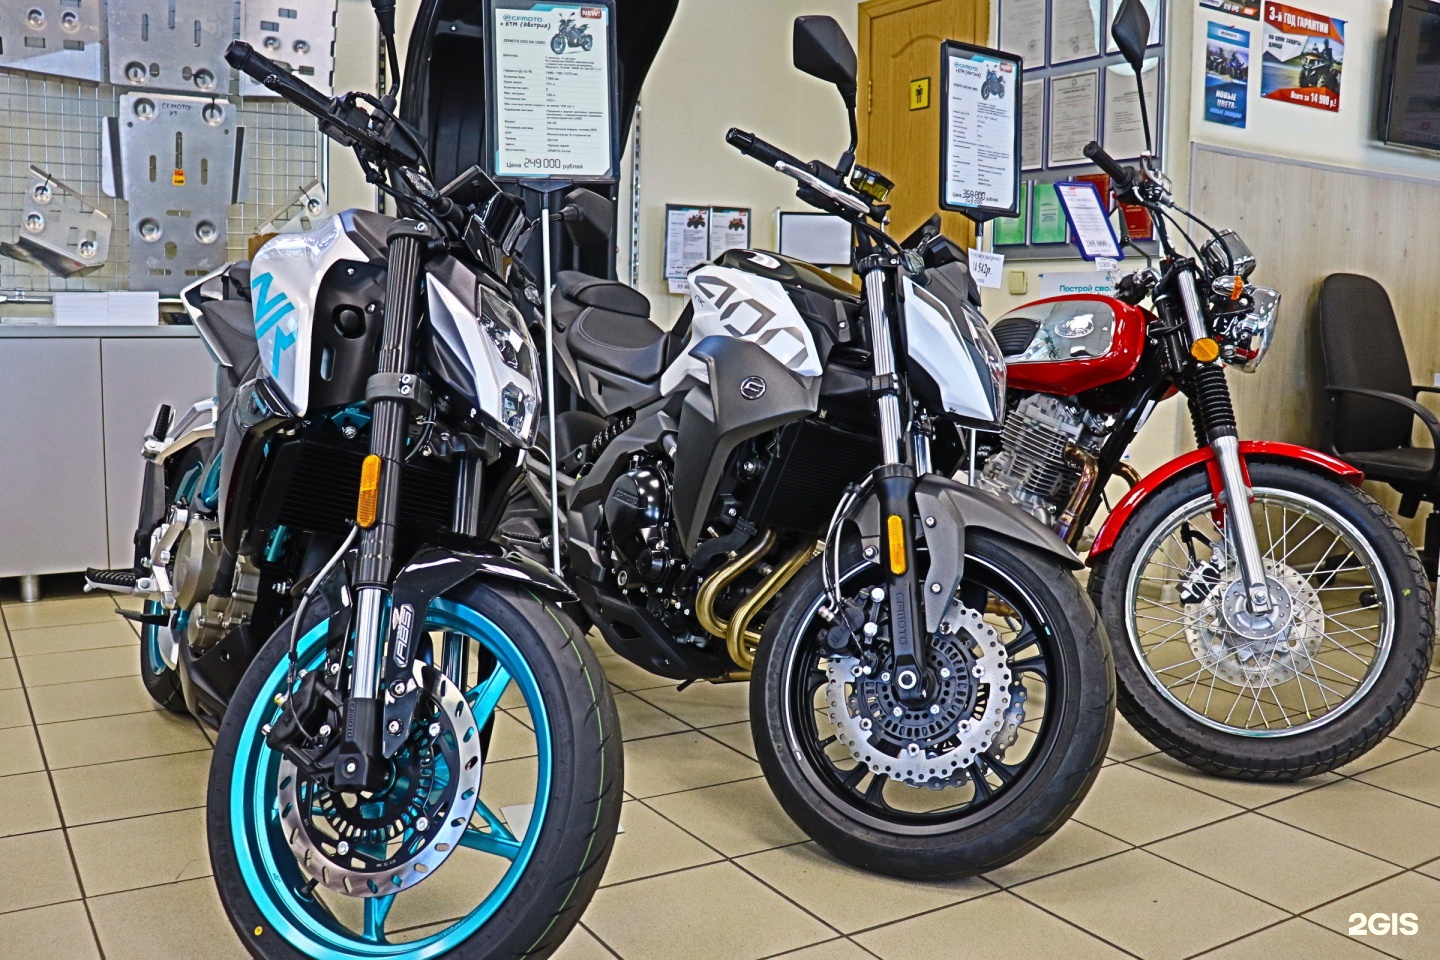 Купить мотоцикл в курске. Мотосалон Universalmotors. Курск мото. Авторынок Курск с мотоциклами.